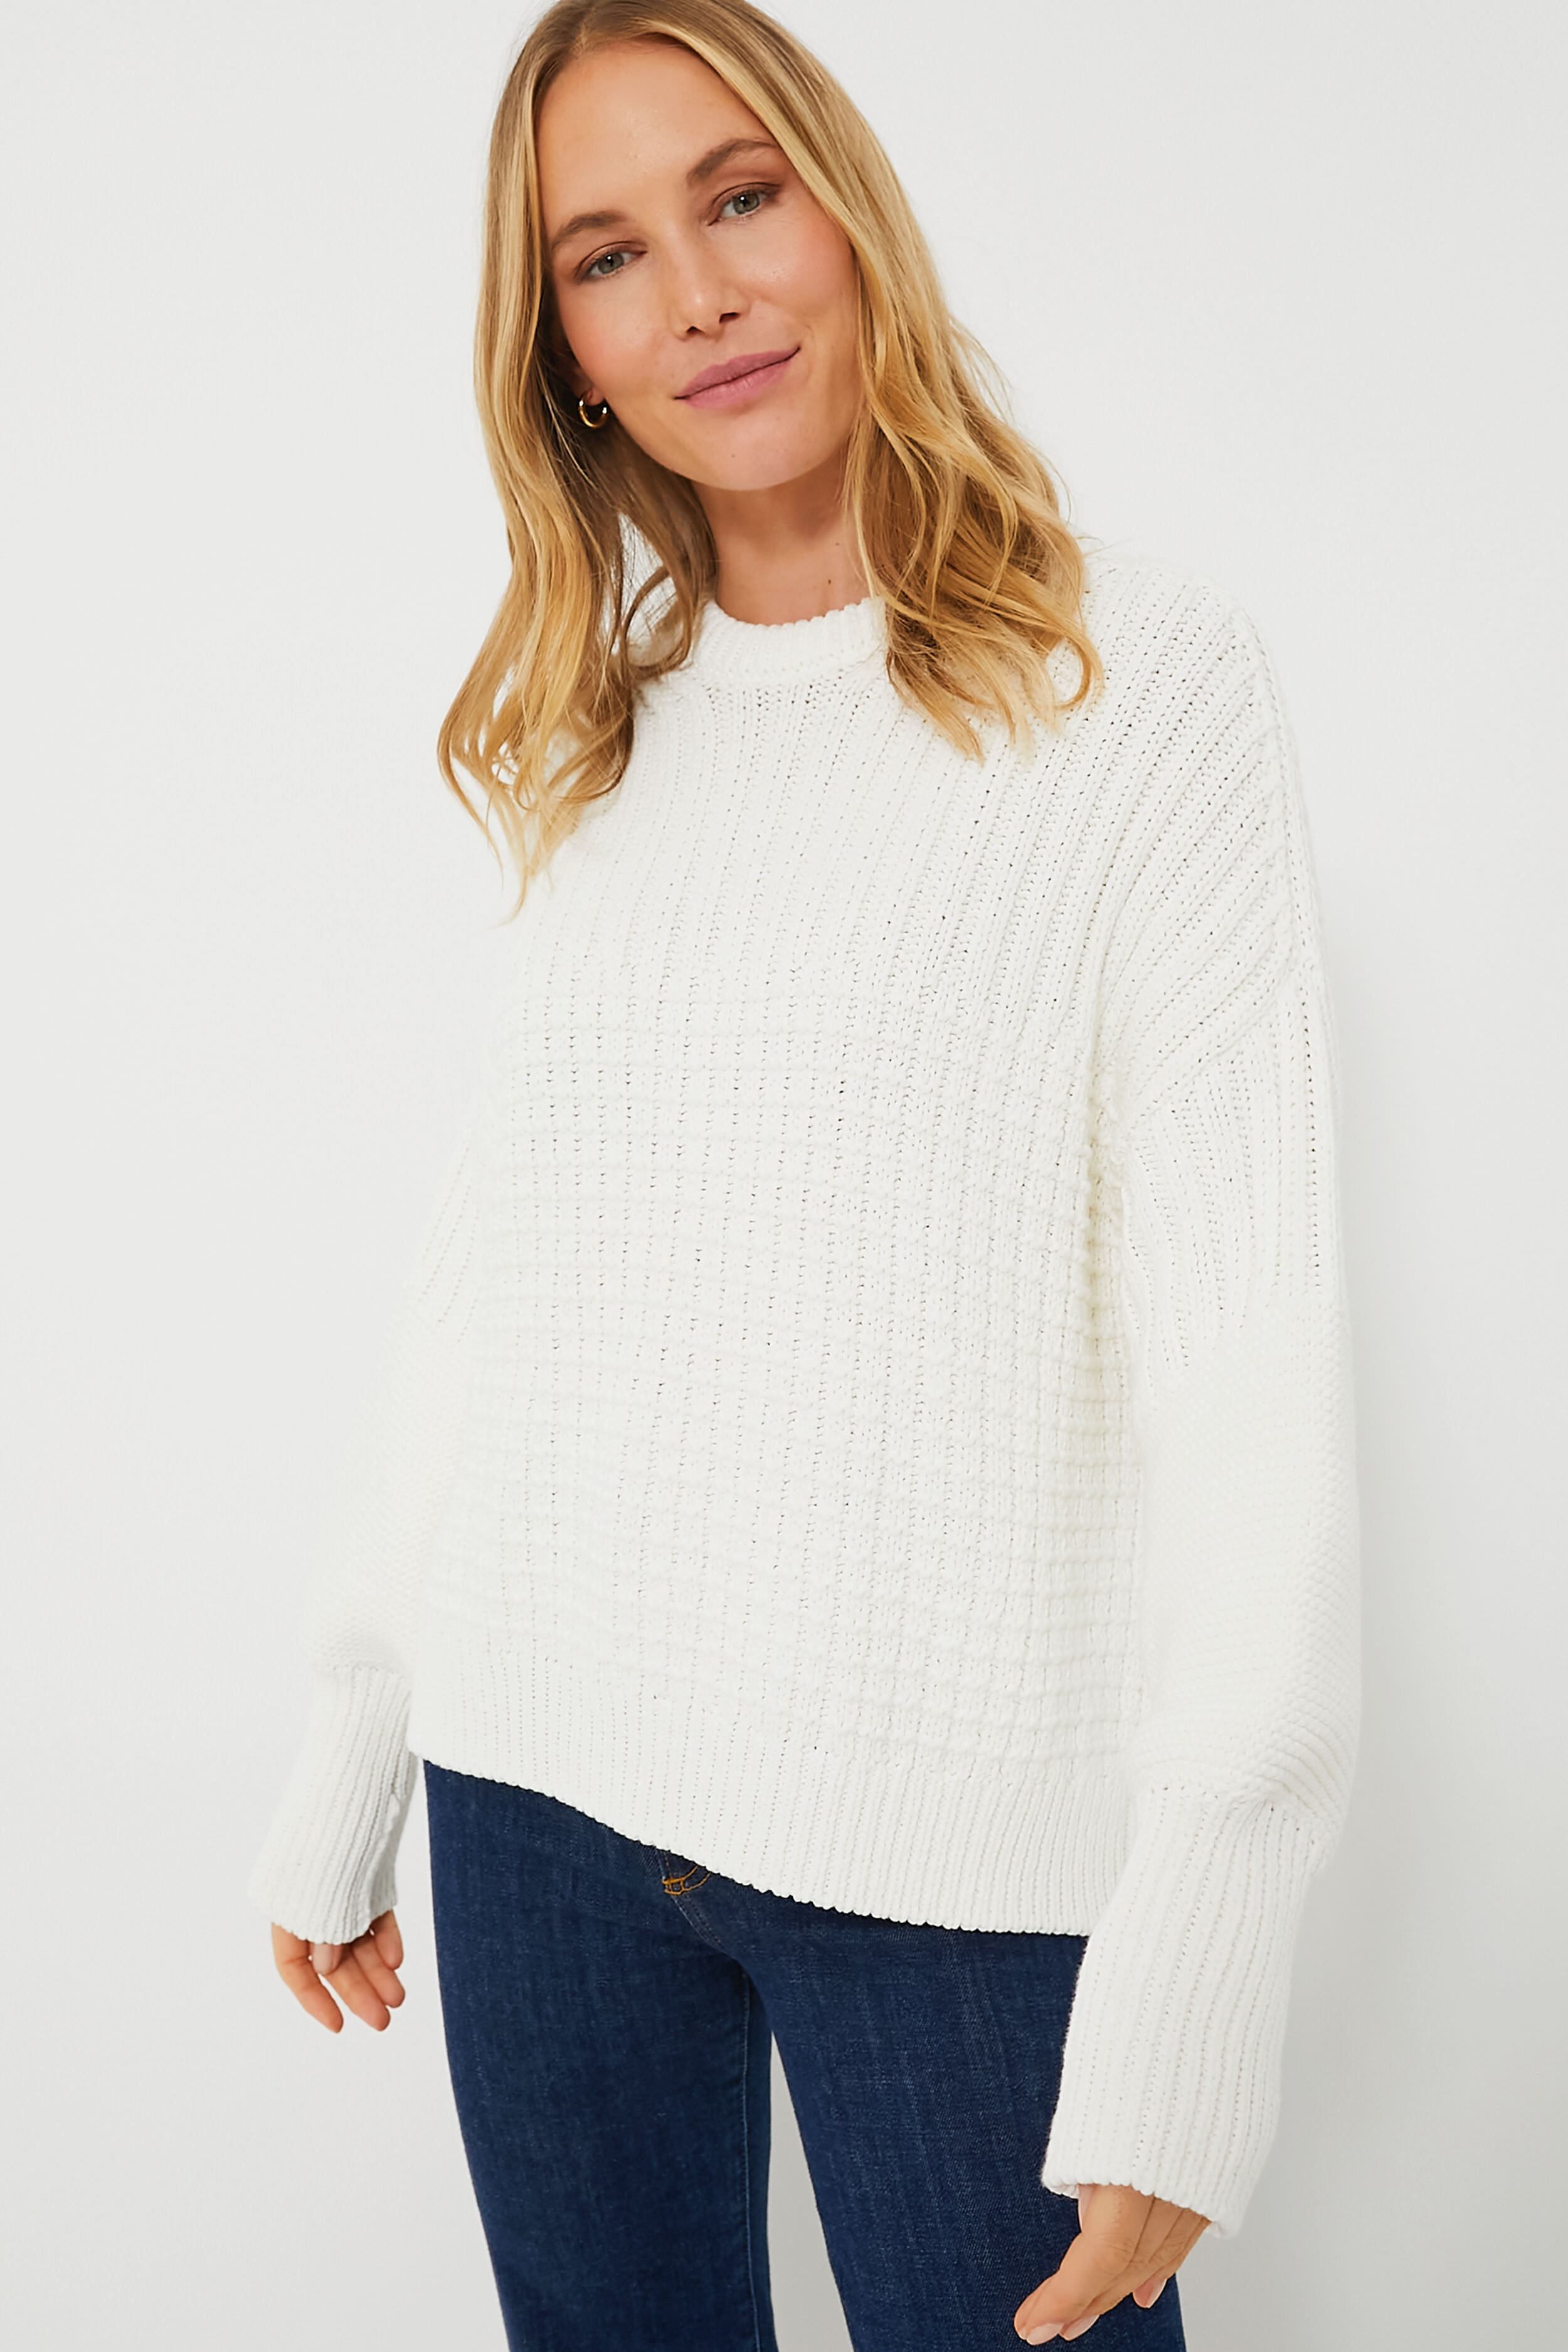 Off White Delcia Sweater | The Knotty Ones